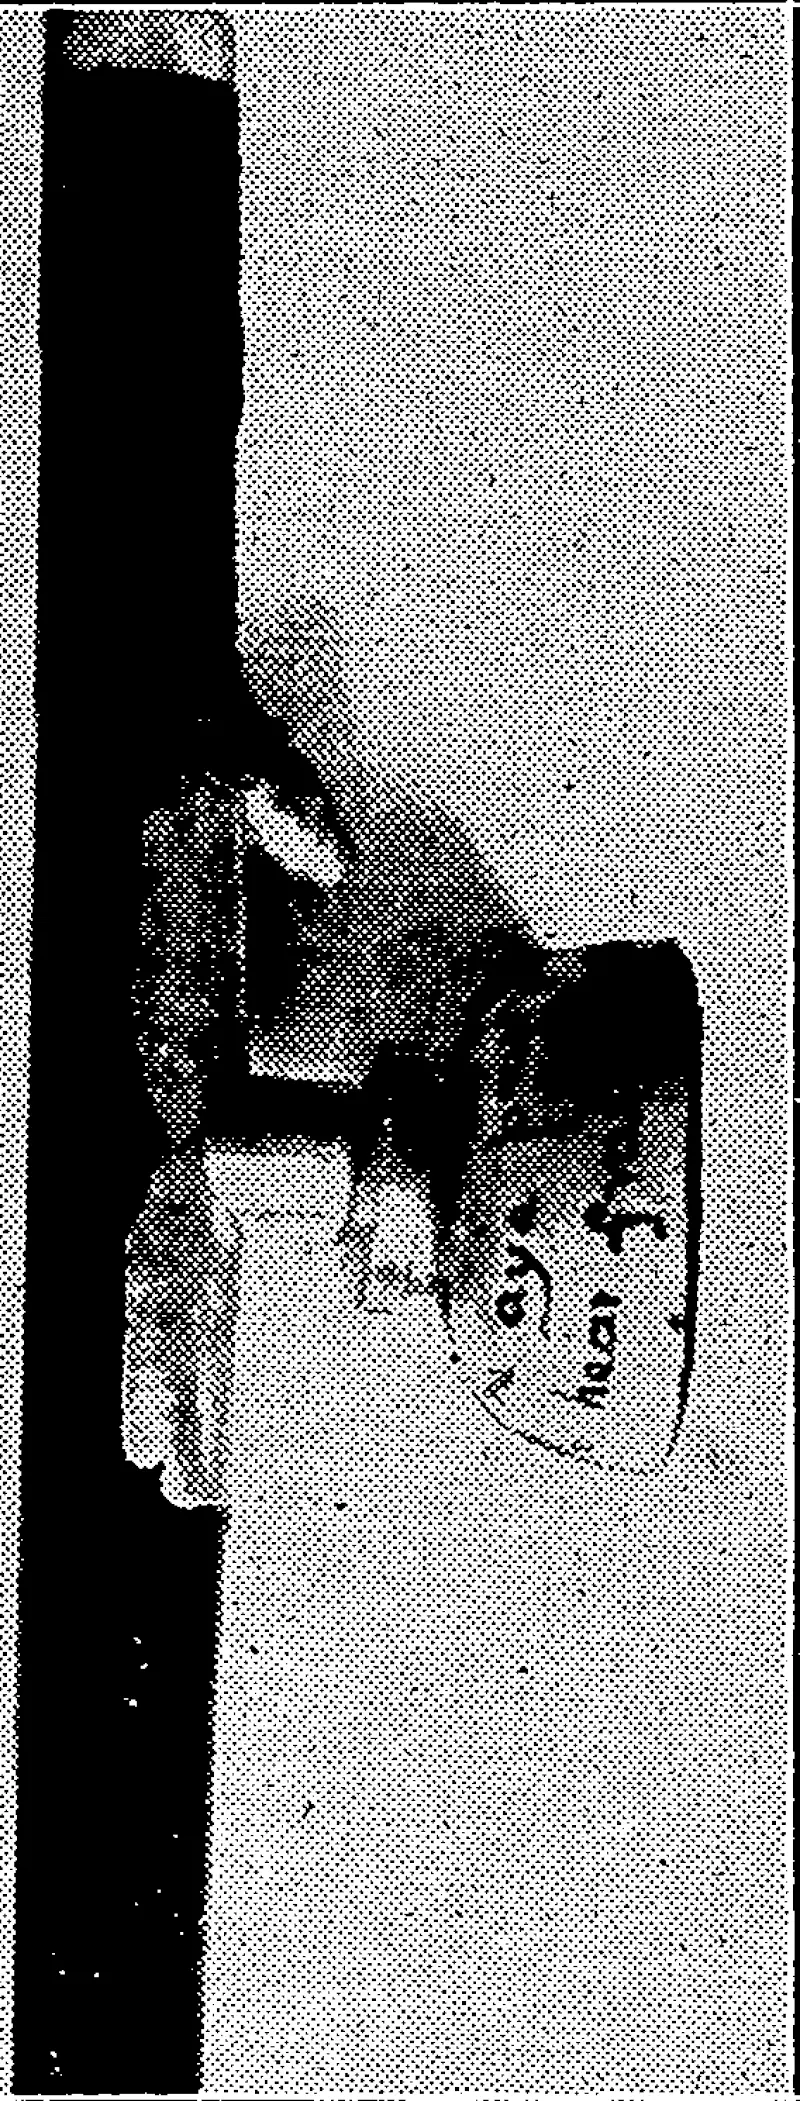 Evening I'ost" Photo.. OPIUM PIPE, captured during Saturday night's raid in ■ Haining street. (Evening Post, 22 February 1932)